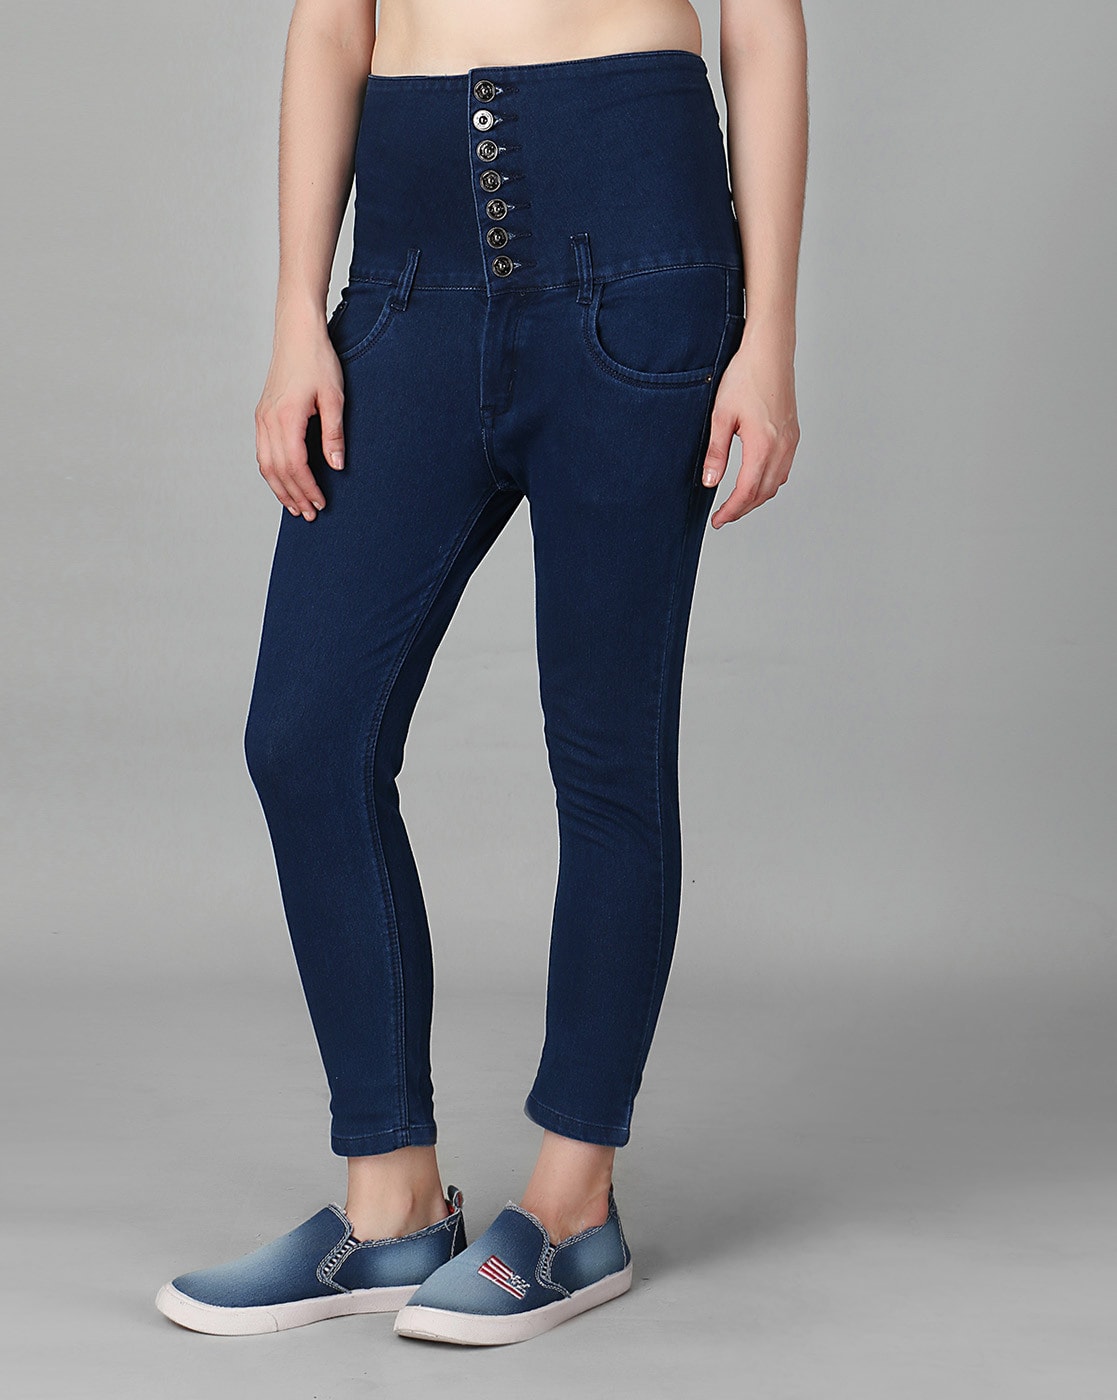 Parisian Tall skinny jeans in indigo | ASOS